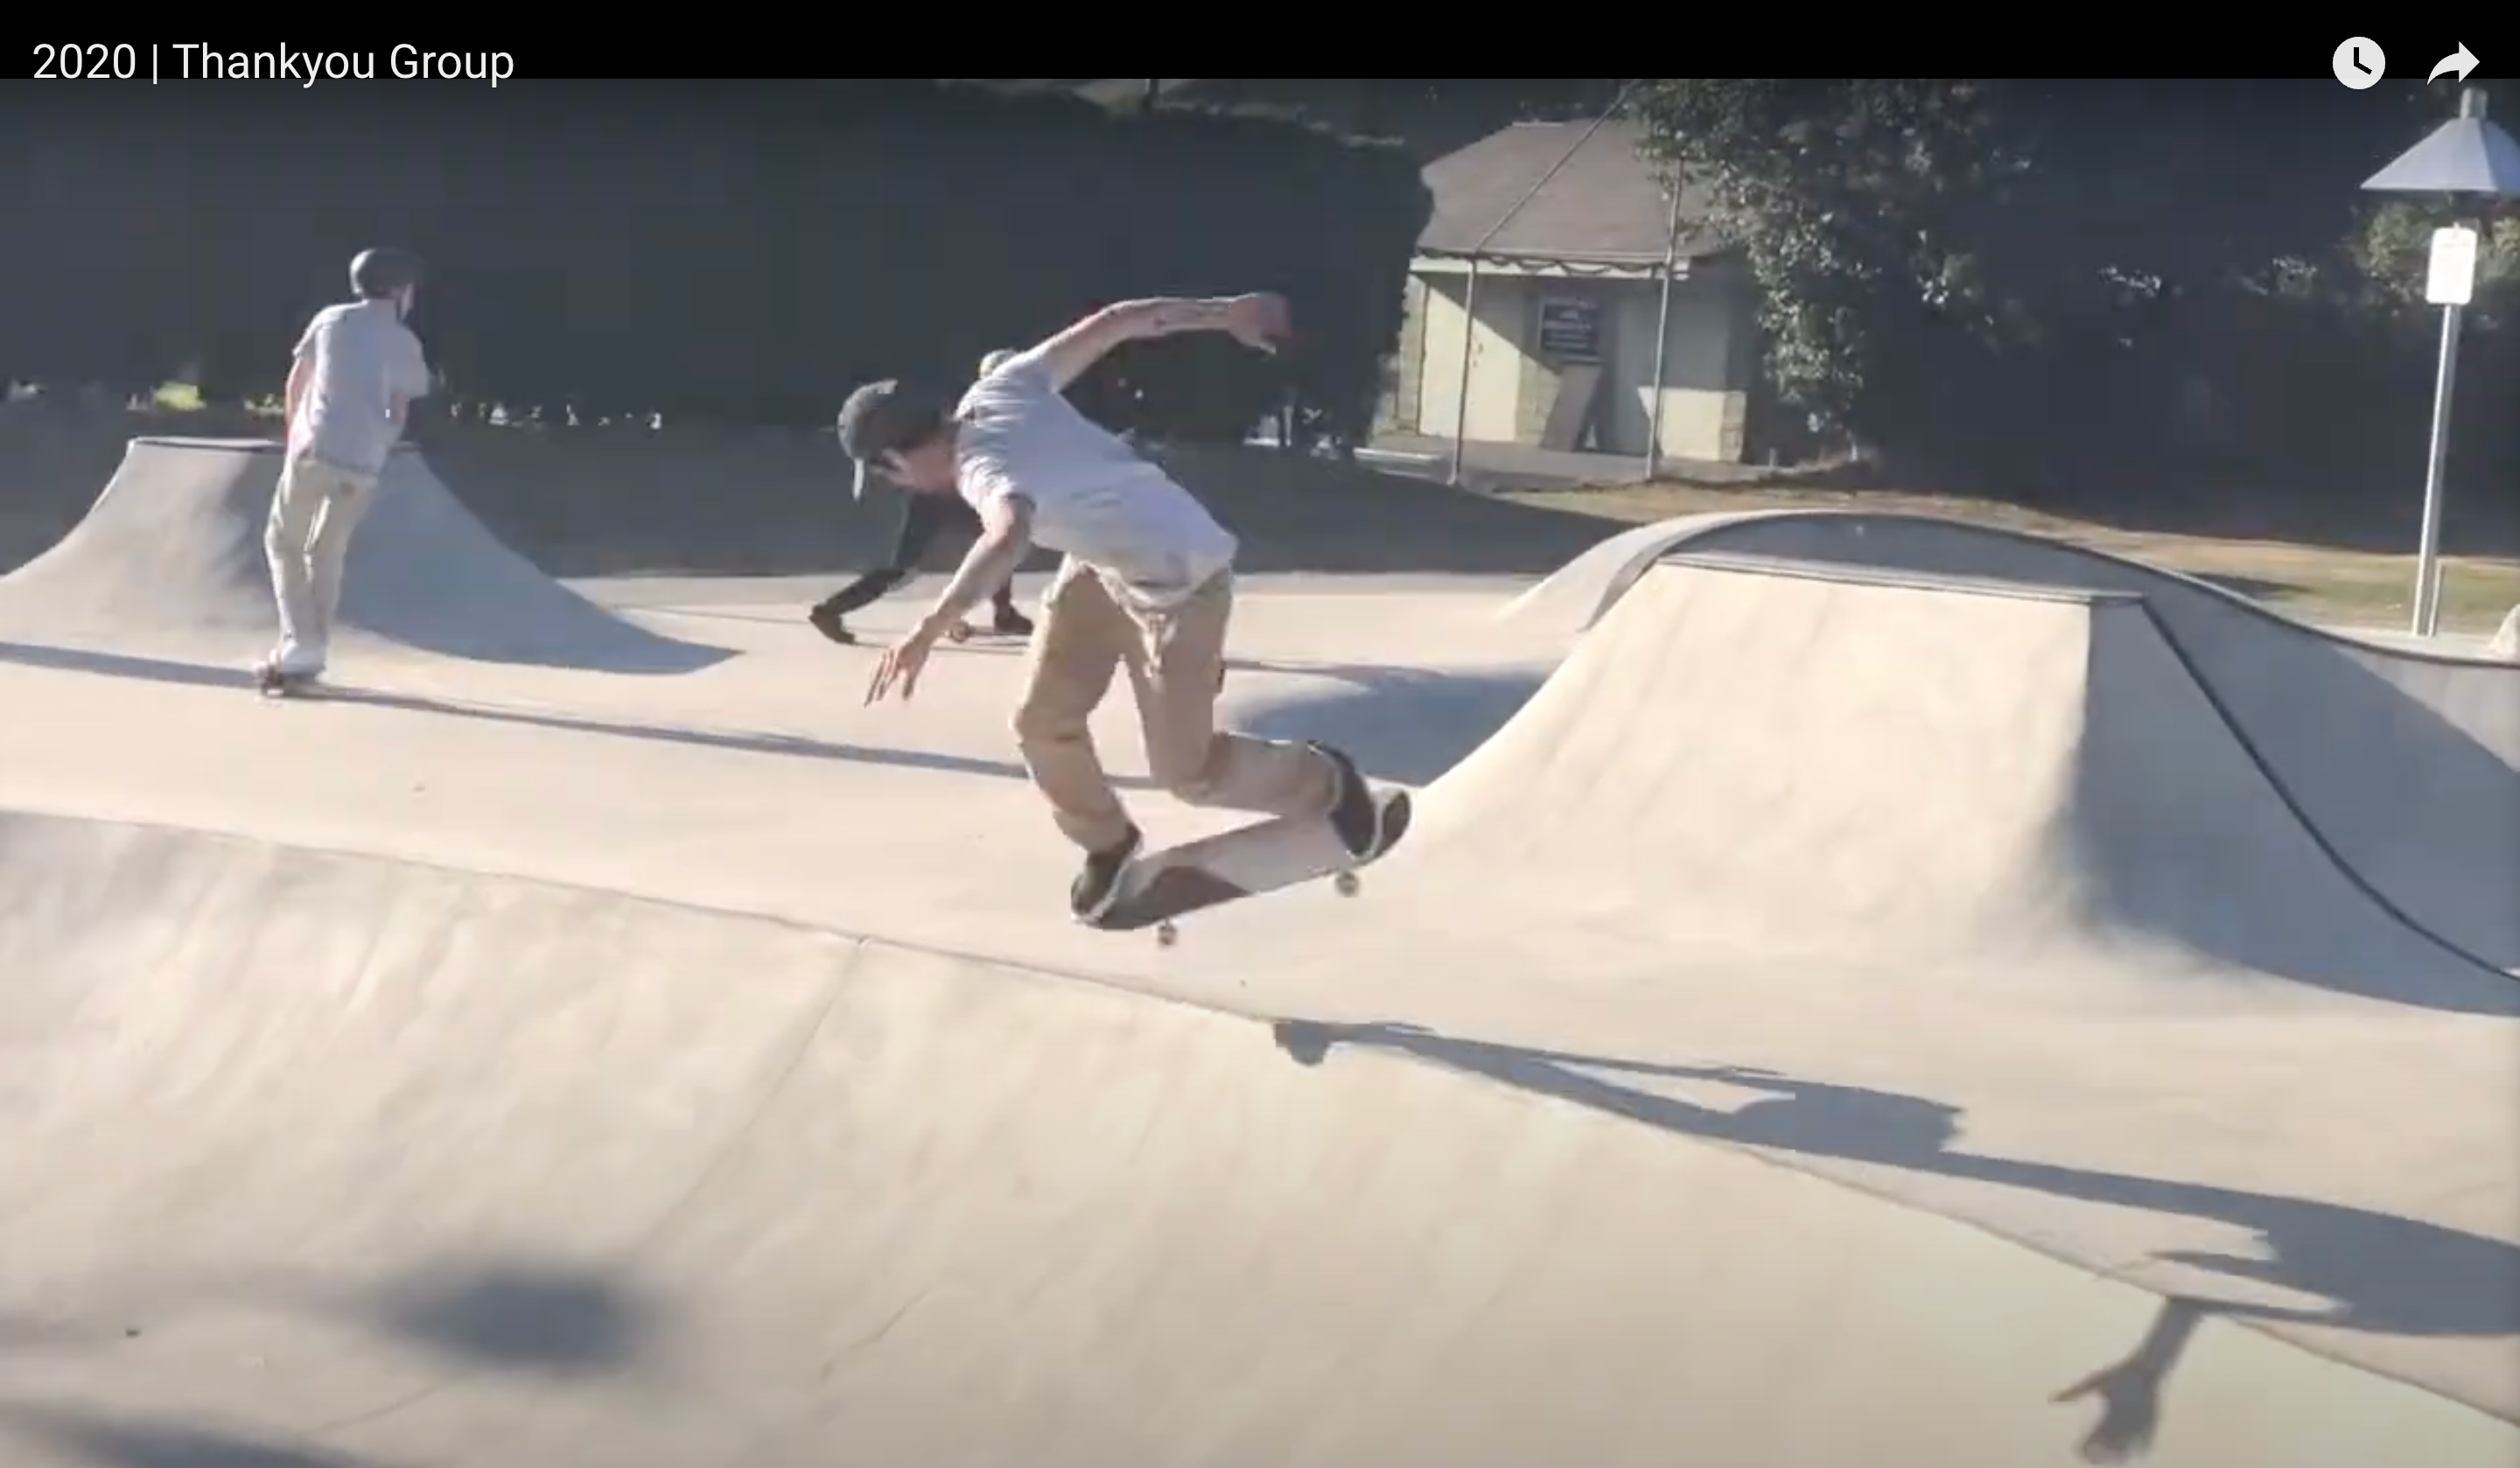 Load video: Skateboarder getting into a nackside noseblunt slide in a bowl